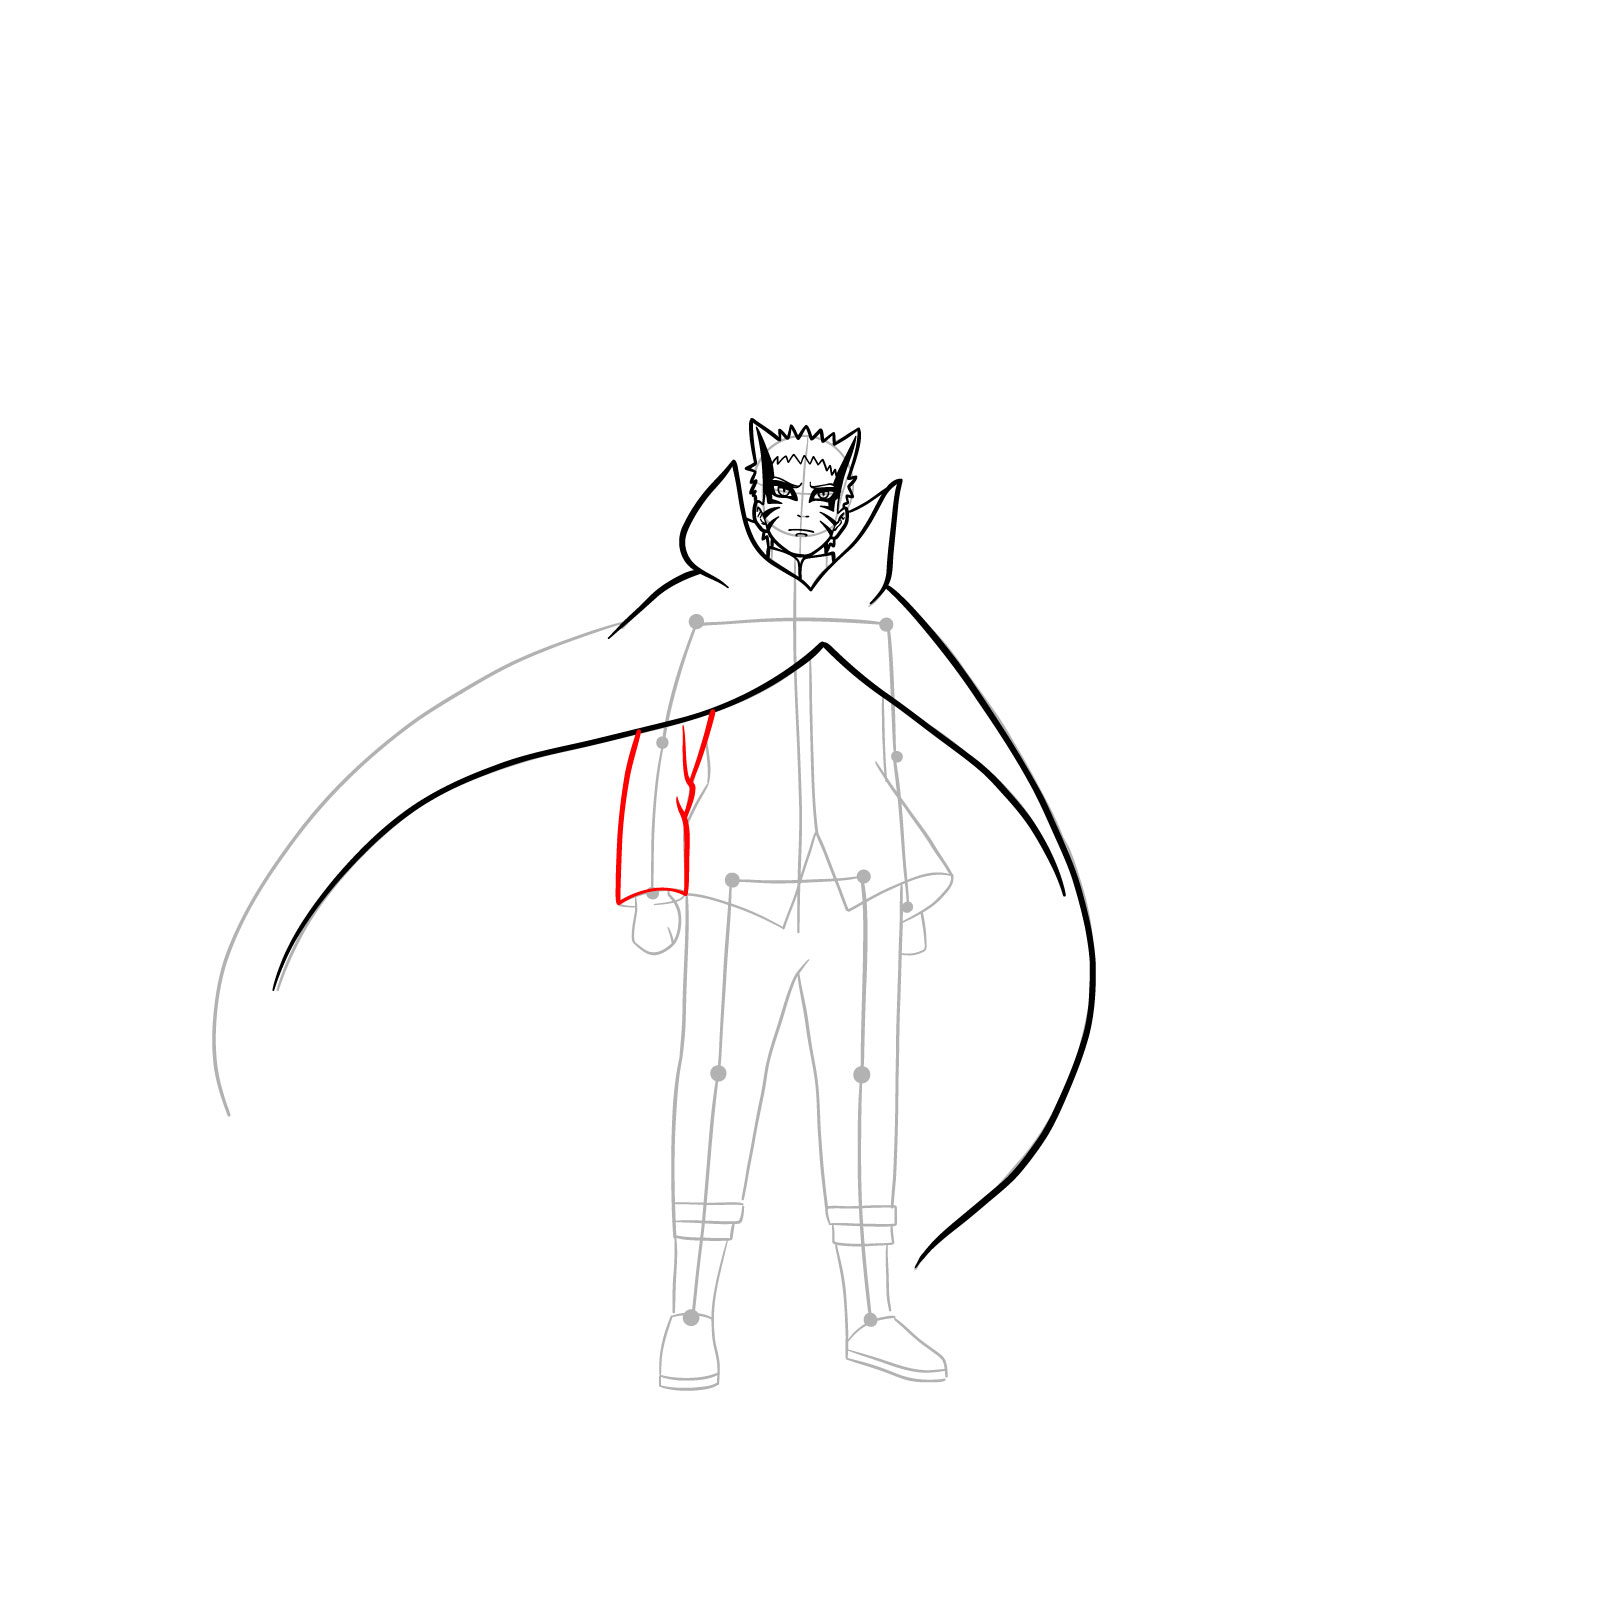 Drawing the right sleeve of Naruto's Baryon Mode jacket - step 16